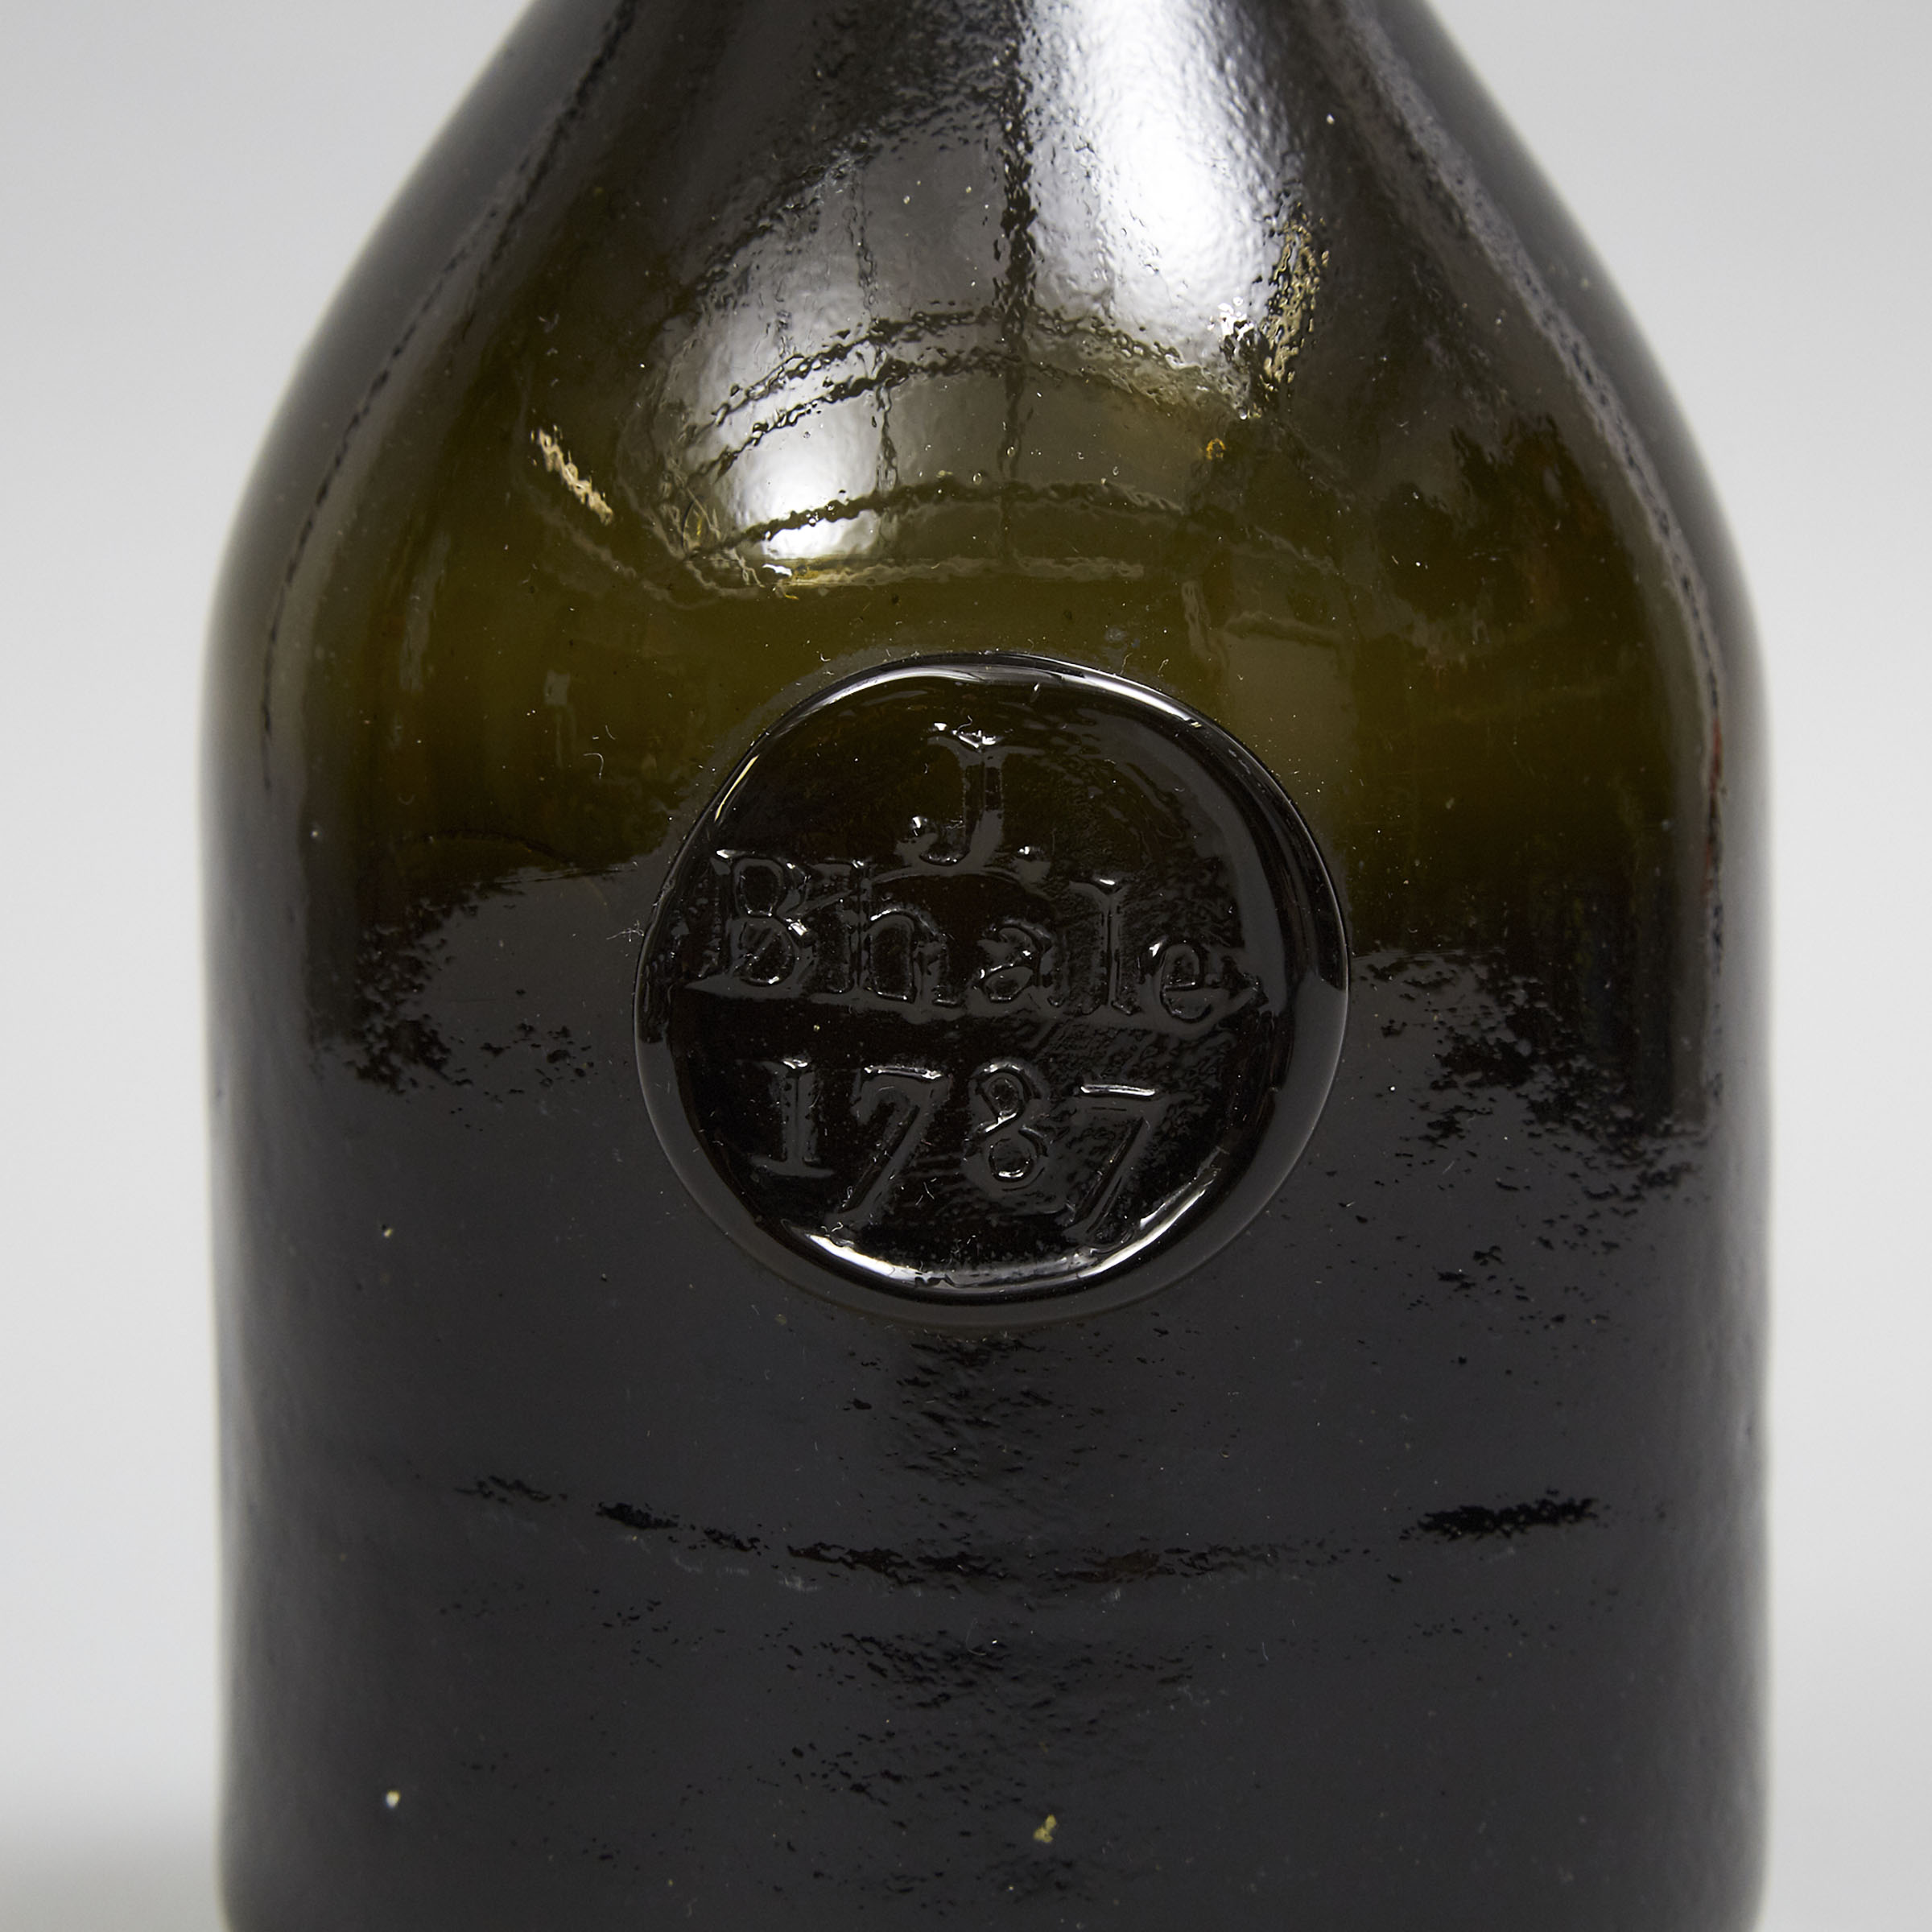 English Green Glass Applied Seal Wine Bottle, J. Bhale, 1787